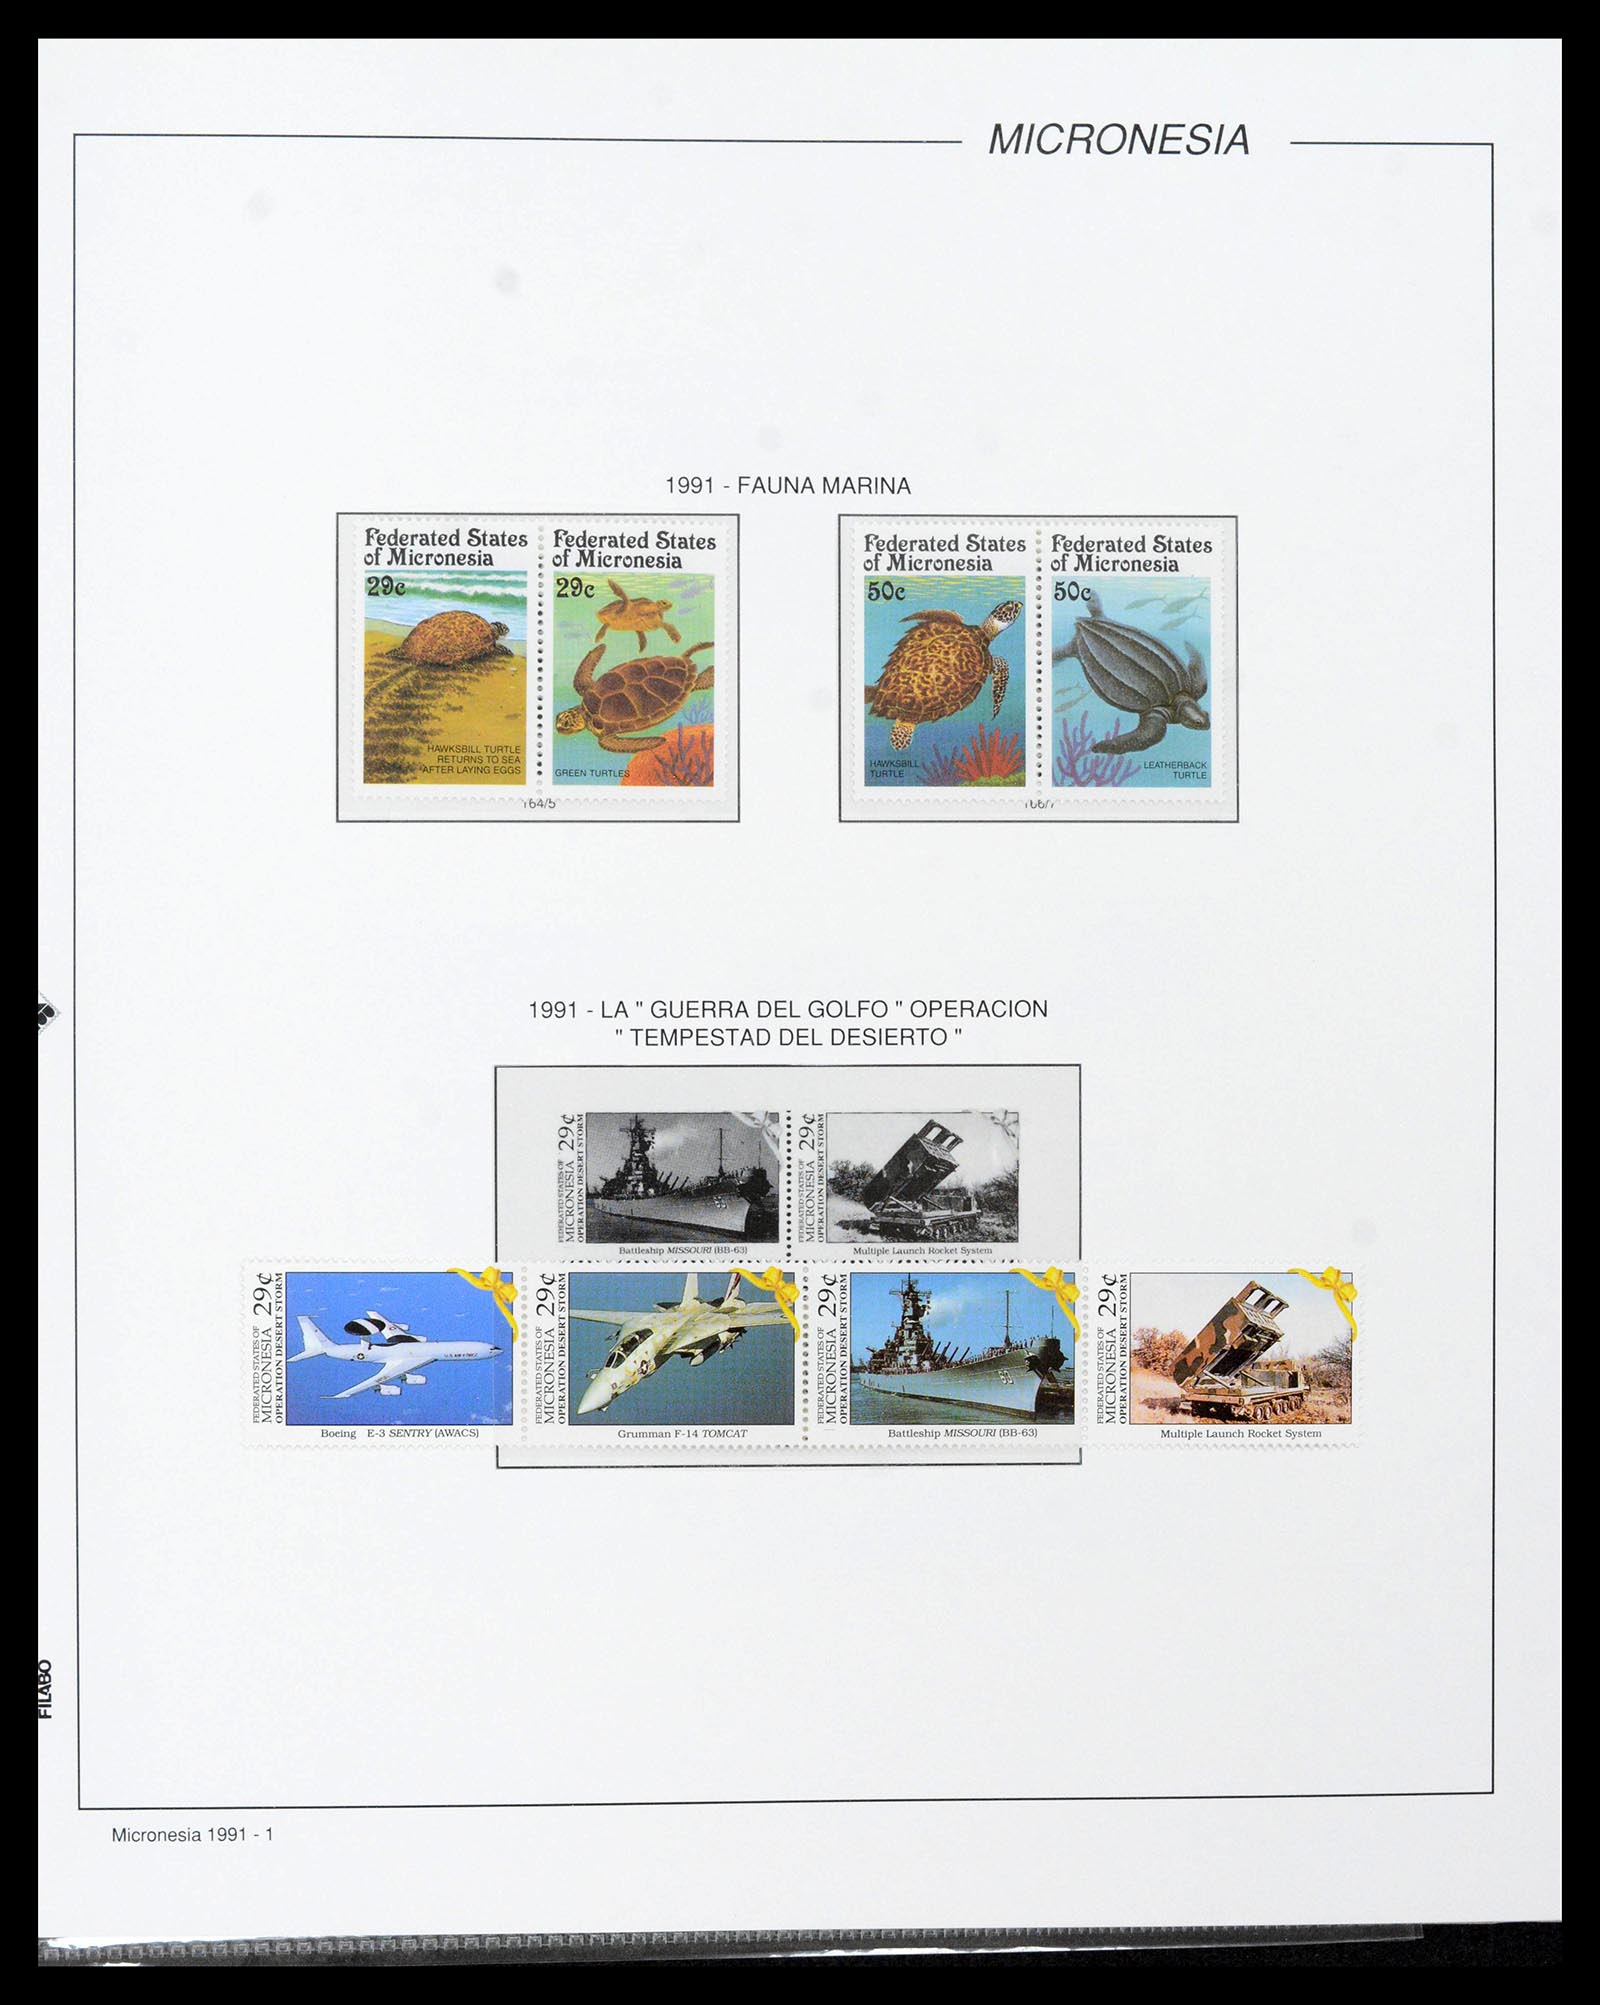 39222 0091 - Stamp collection 39222 Palau, Micronesia and Marshall islands 1980-1995.